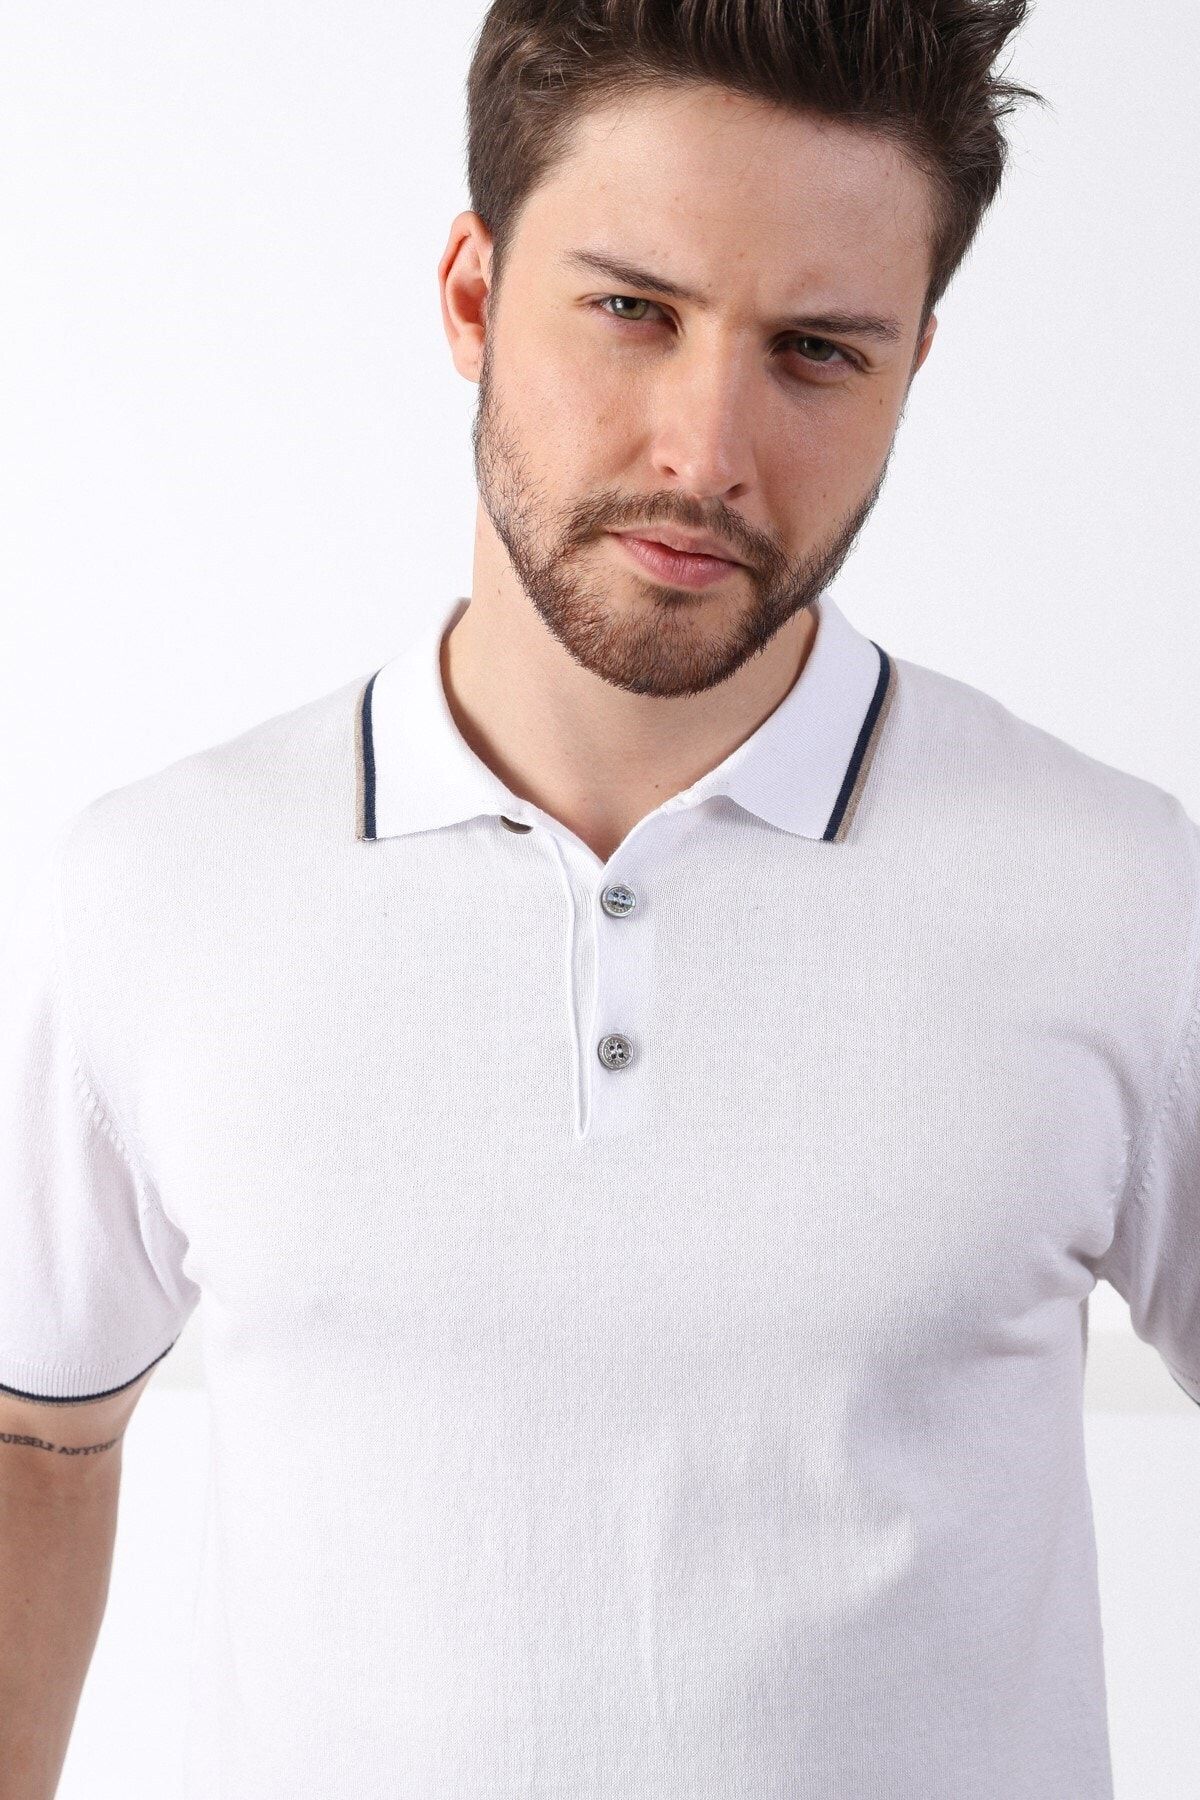 Ferraro Beyaz/bej Yaka Şerit Düğmeli %100 Pamuk Erkek Triko T-shirt